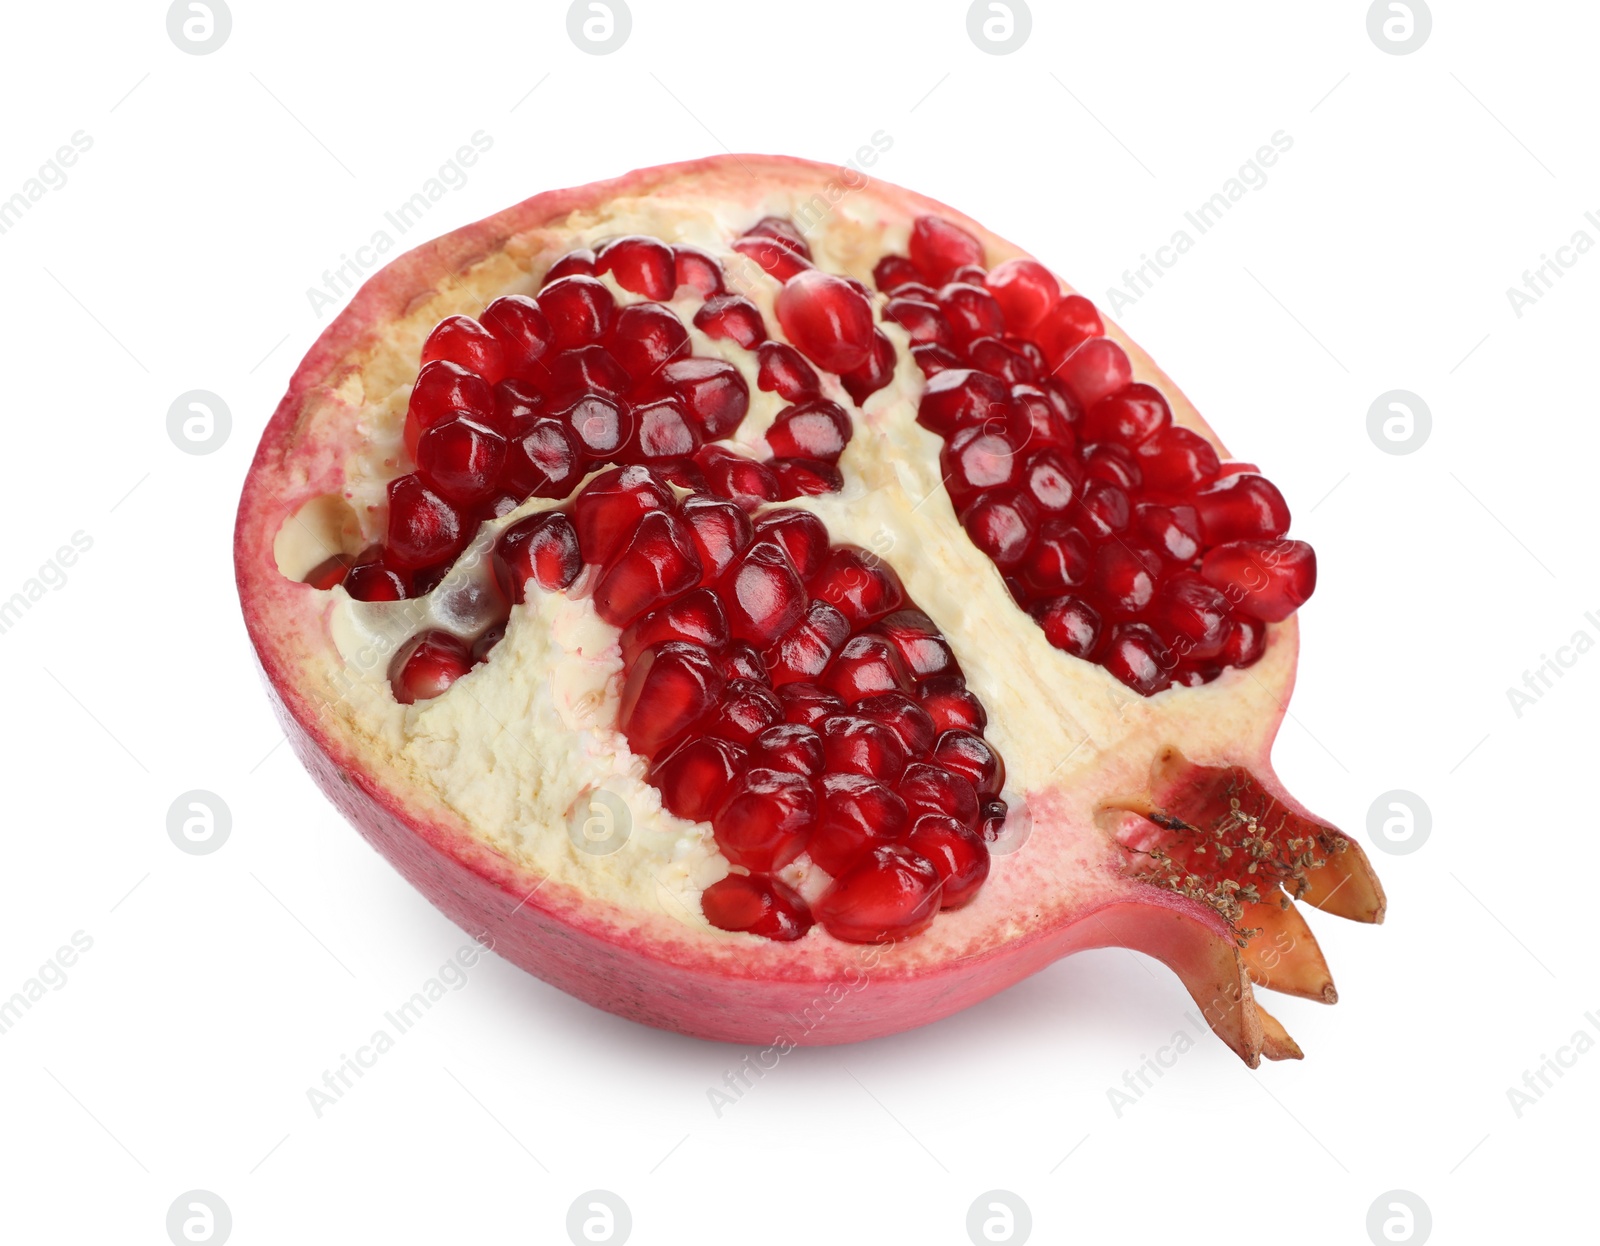 Photo of Half of ripe juicy pomegranate isolated on white